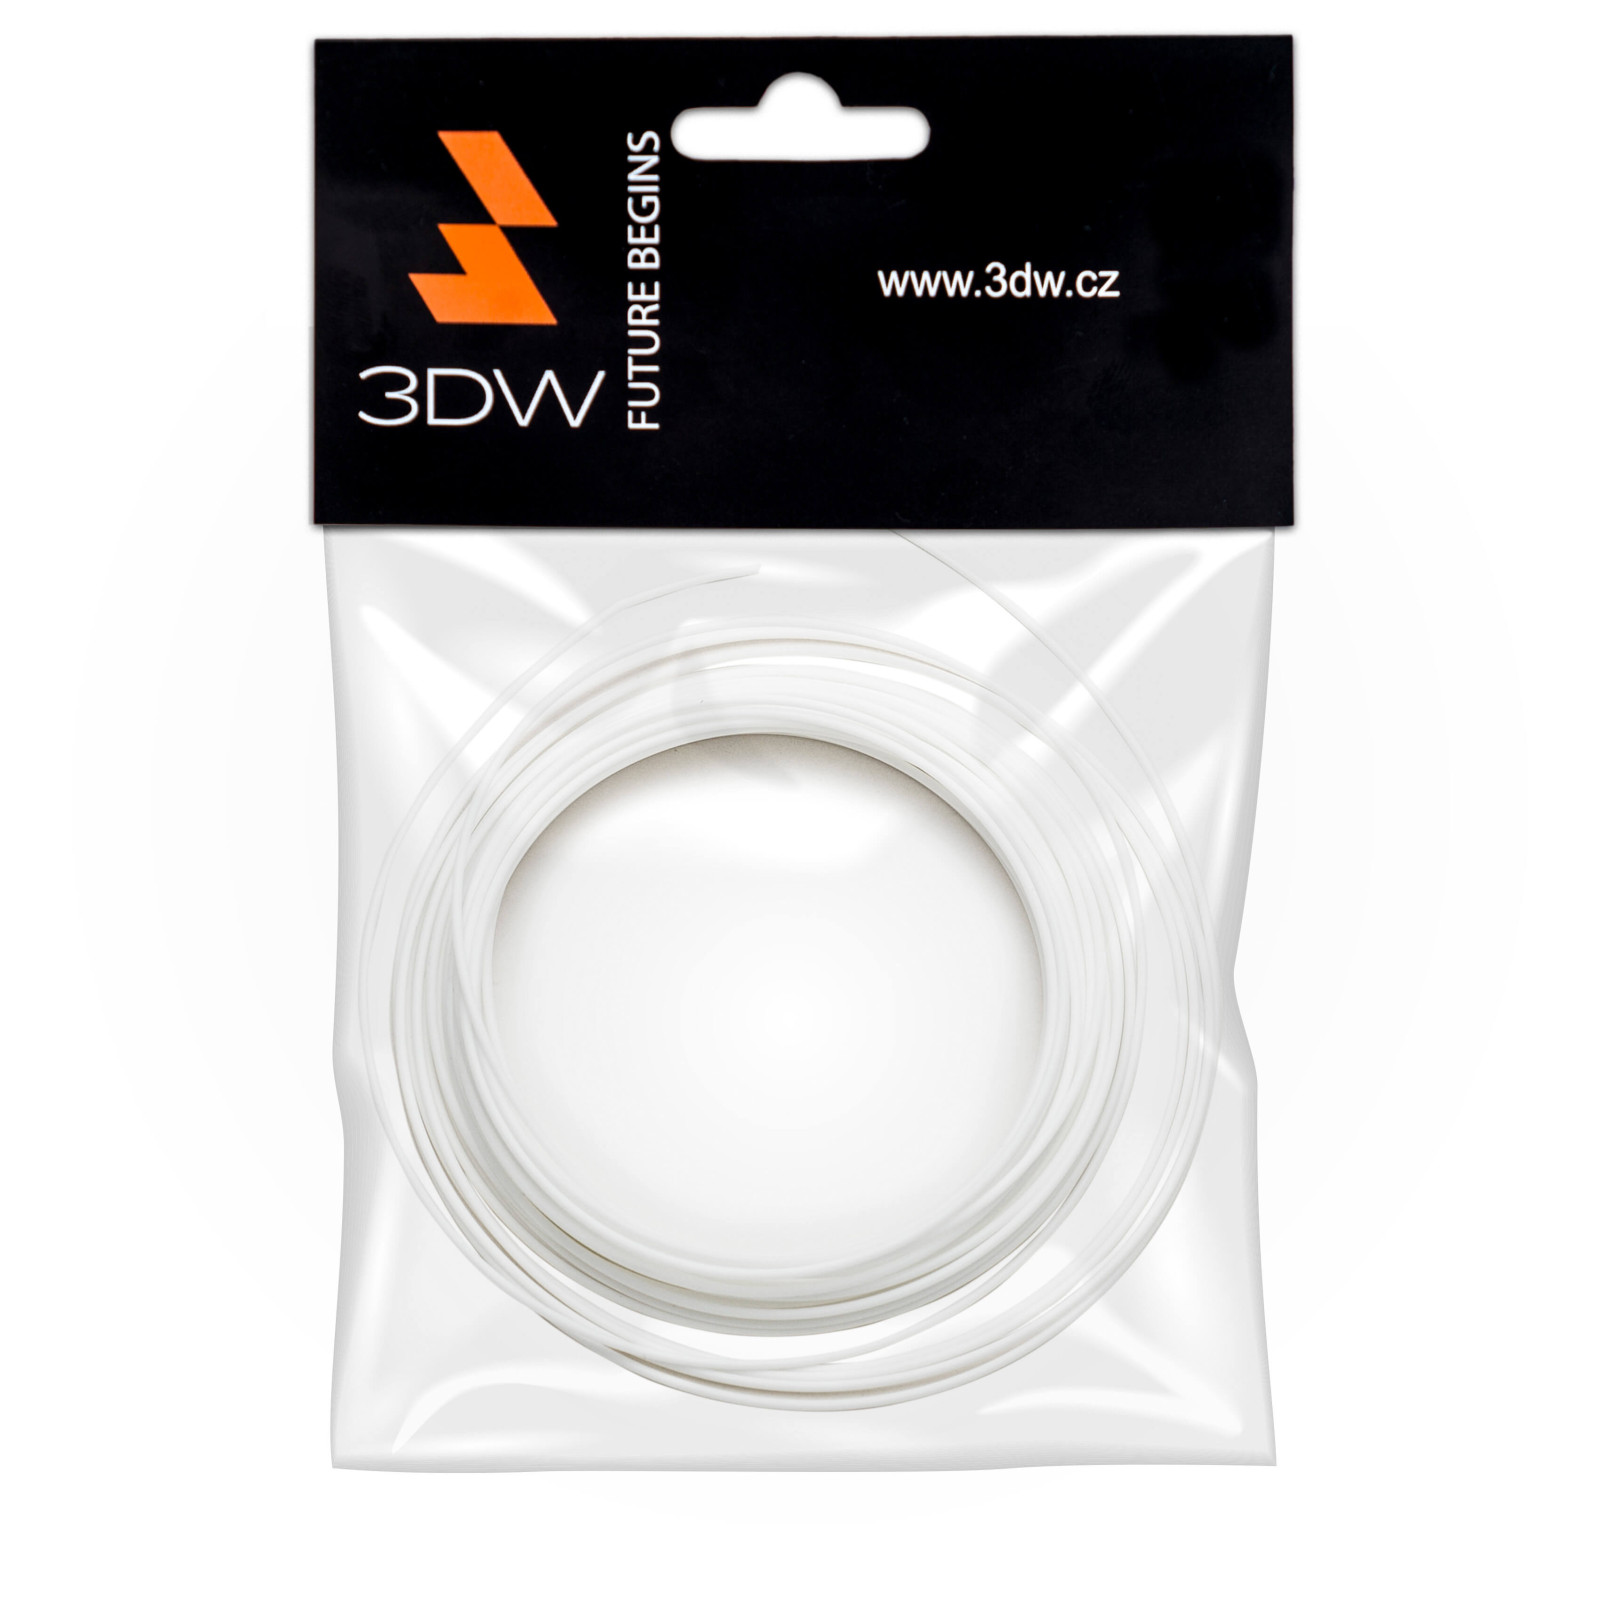 Levně 3DW - ABS filament 1,75mm bílá, 10m, tisk 220-250°C